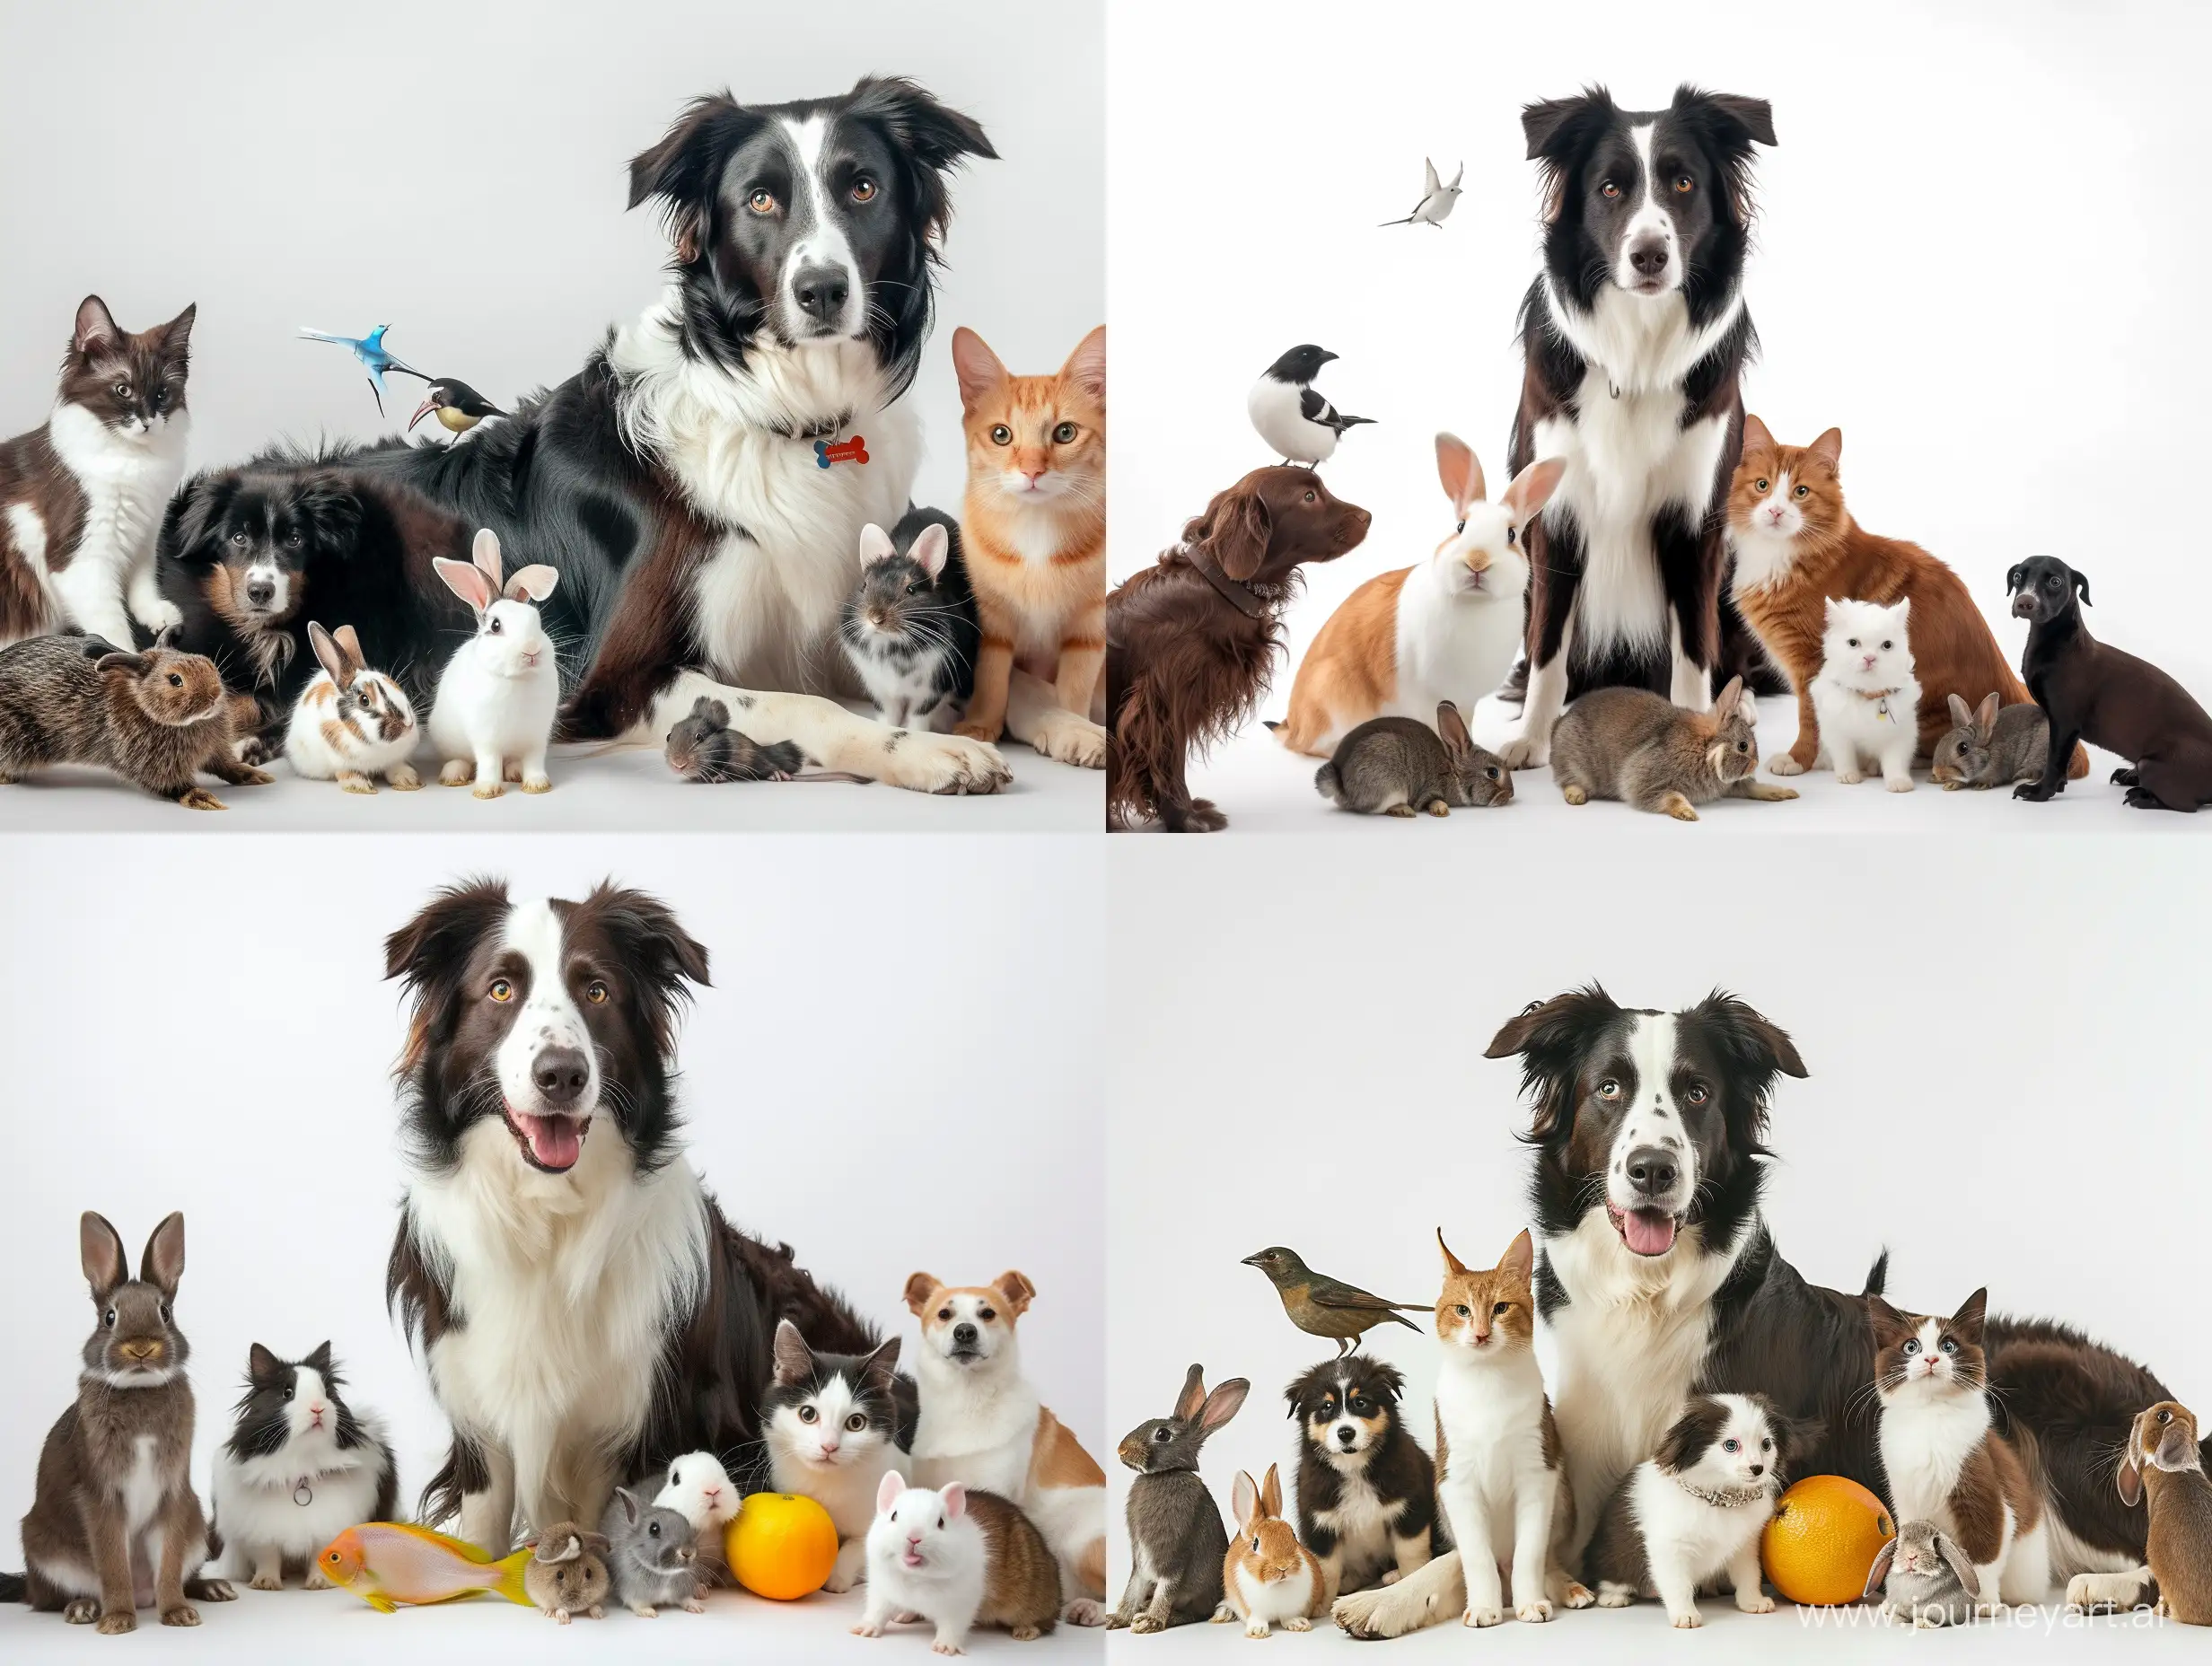 Group of pets posing around a border collie: dog, cat, ferret, rabbit, bird, fish, rodent